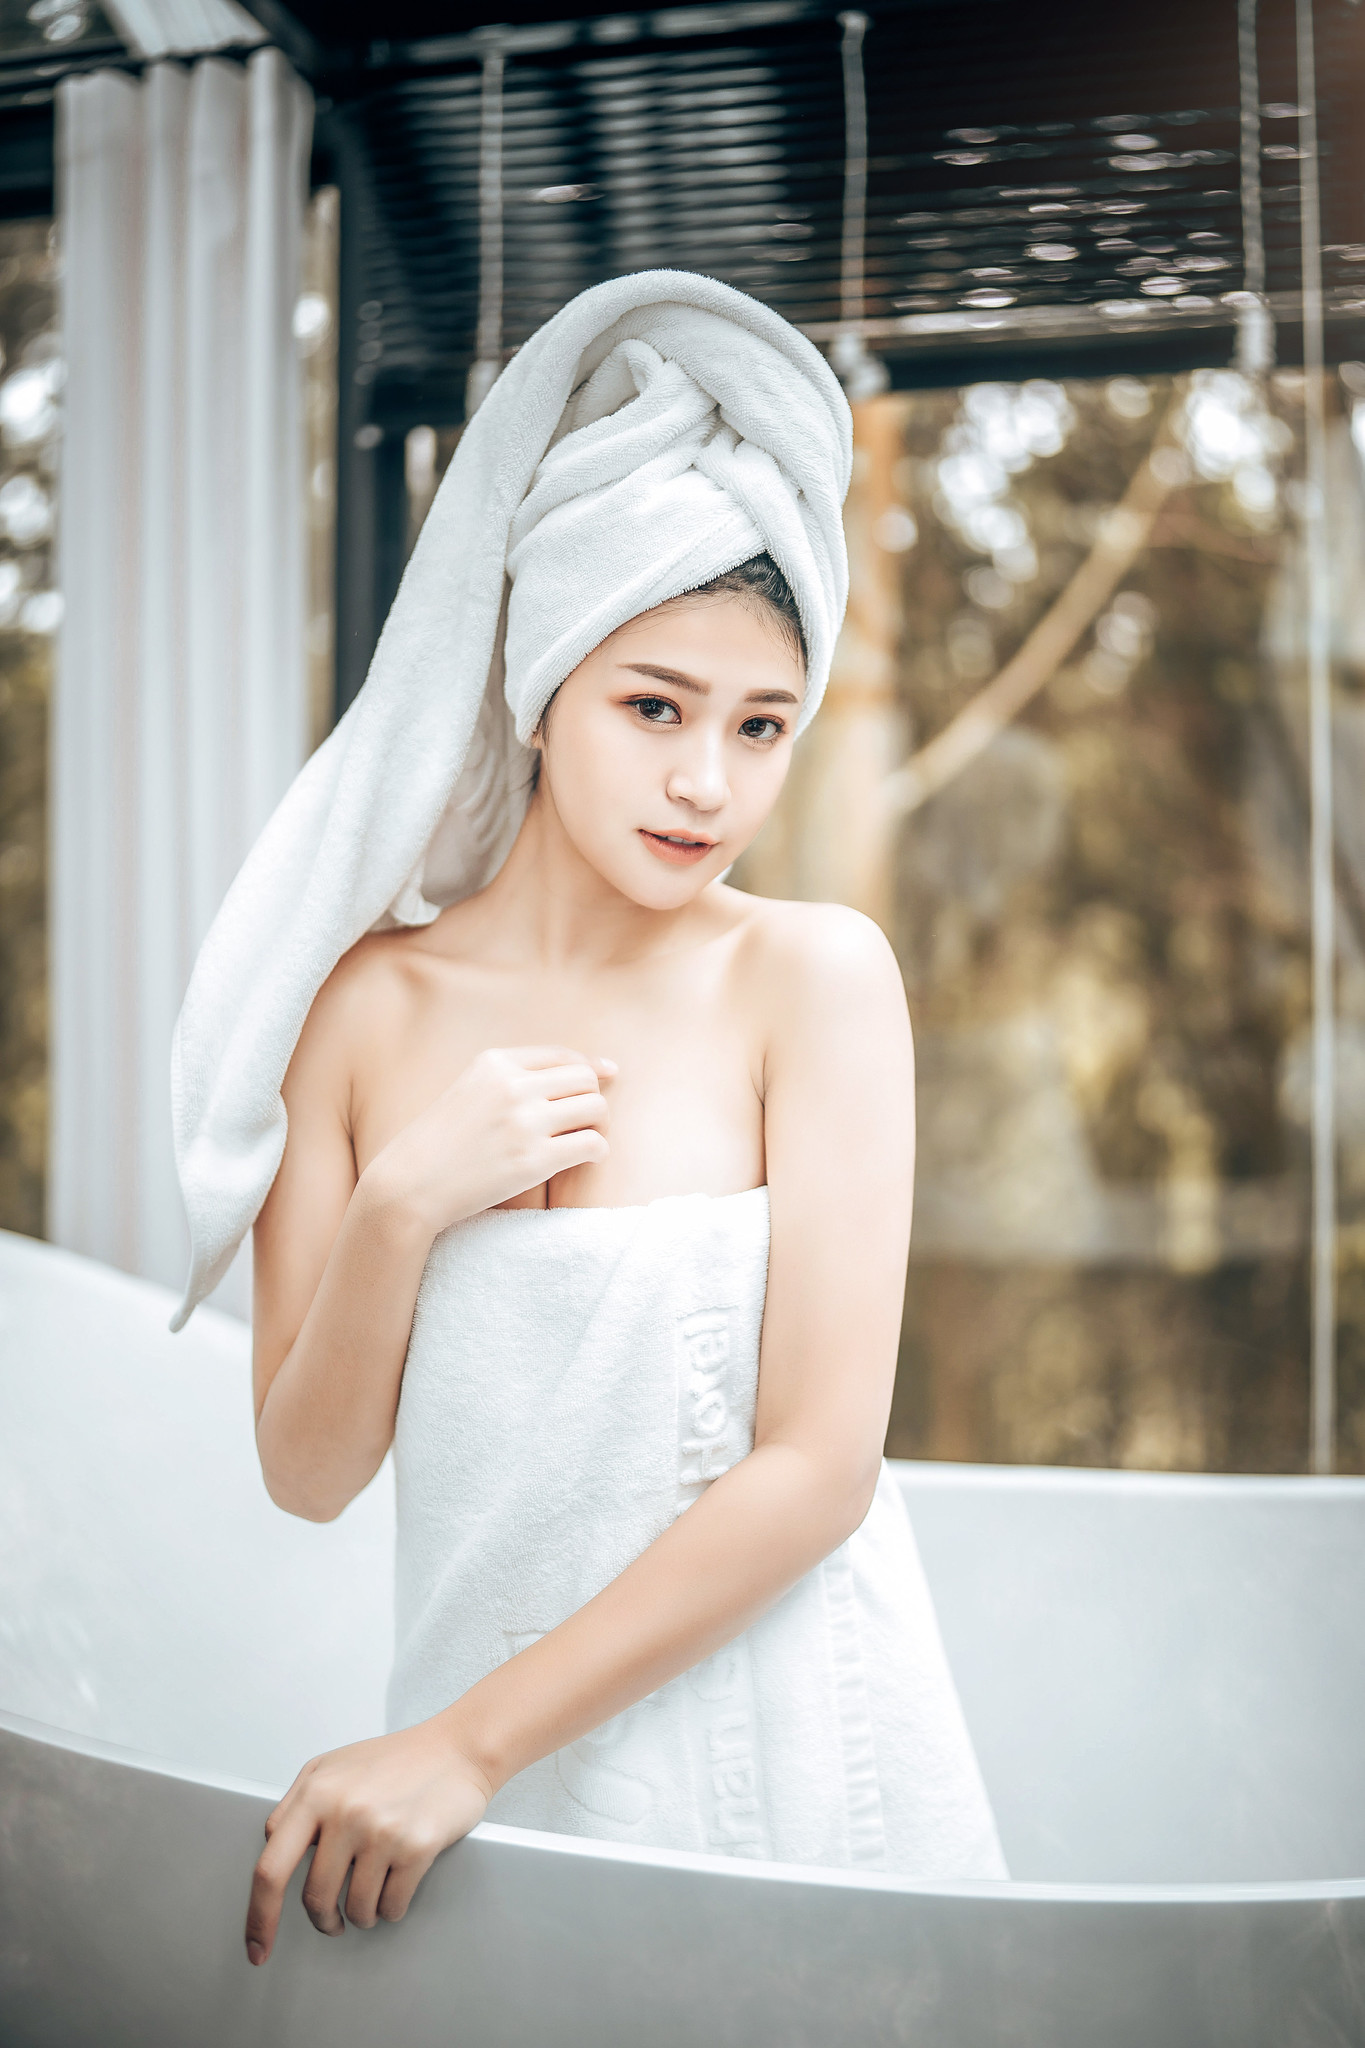 Asian Towel Women Model Looking At Viewer Women Indoors Indoors Sexy Funk Pig 1365x2048